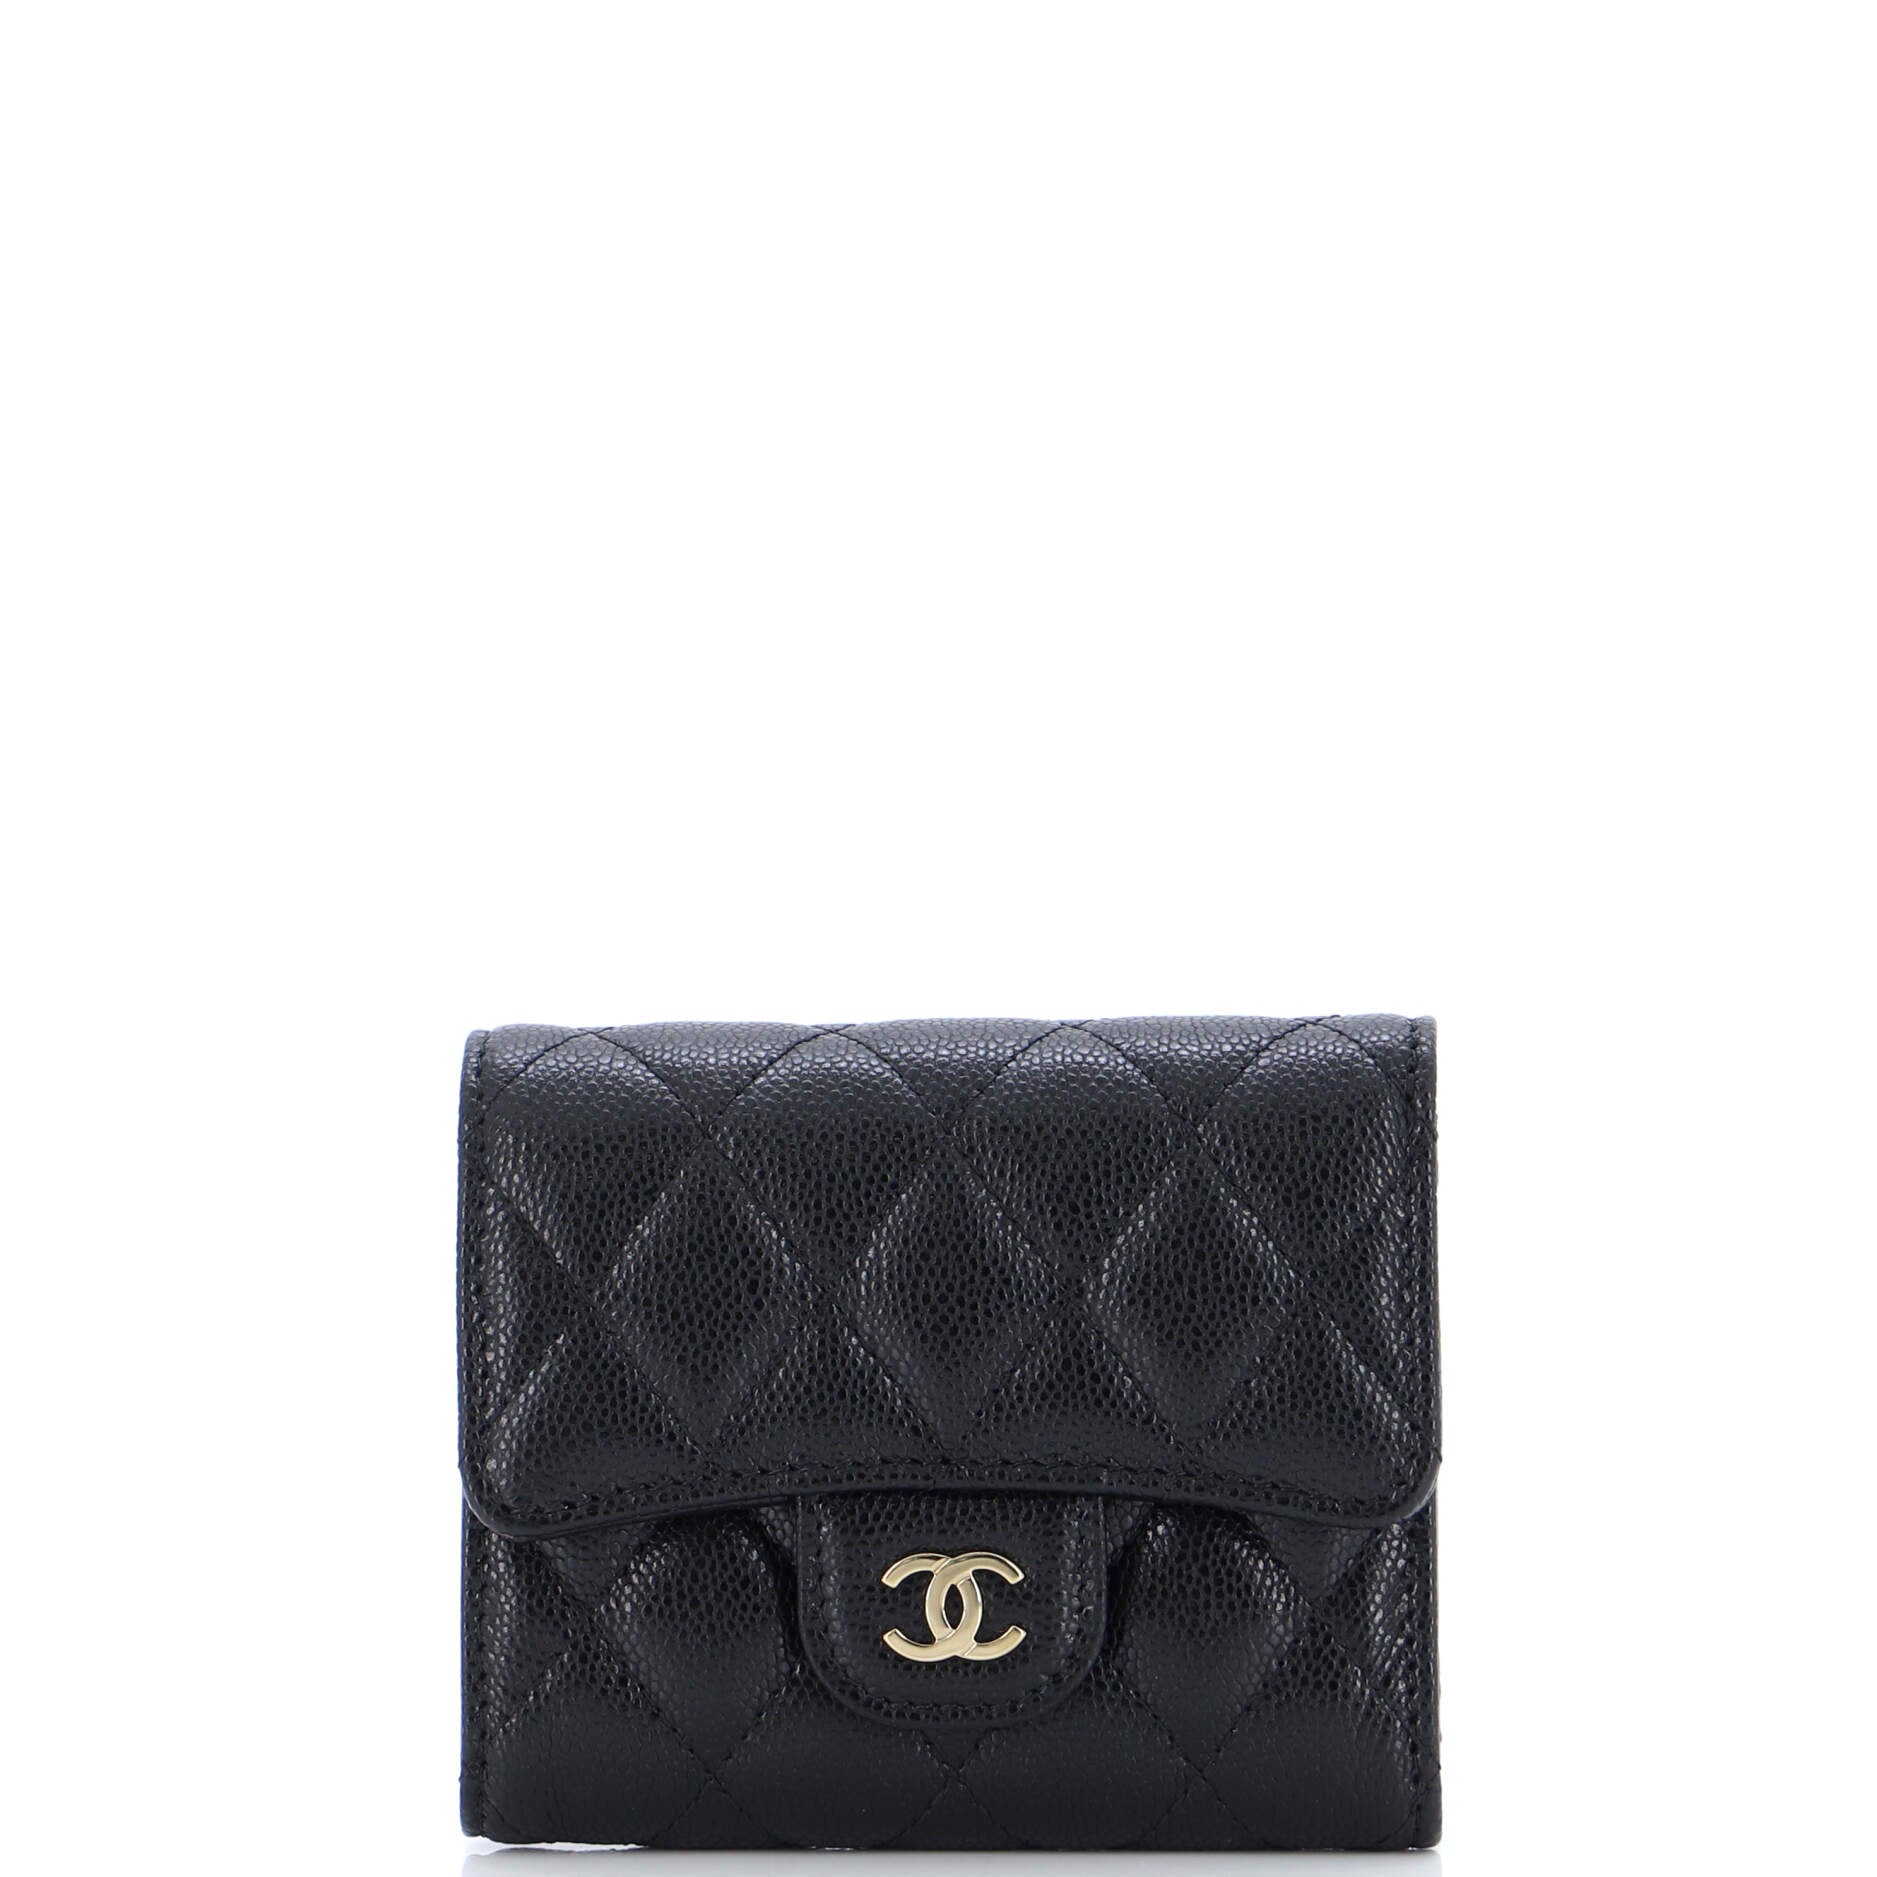 Chanel Boy Chanel Chain Wallet Long Caviar Skin Black Ap1117 Gold Hardware